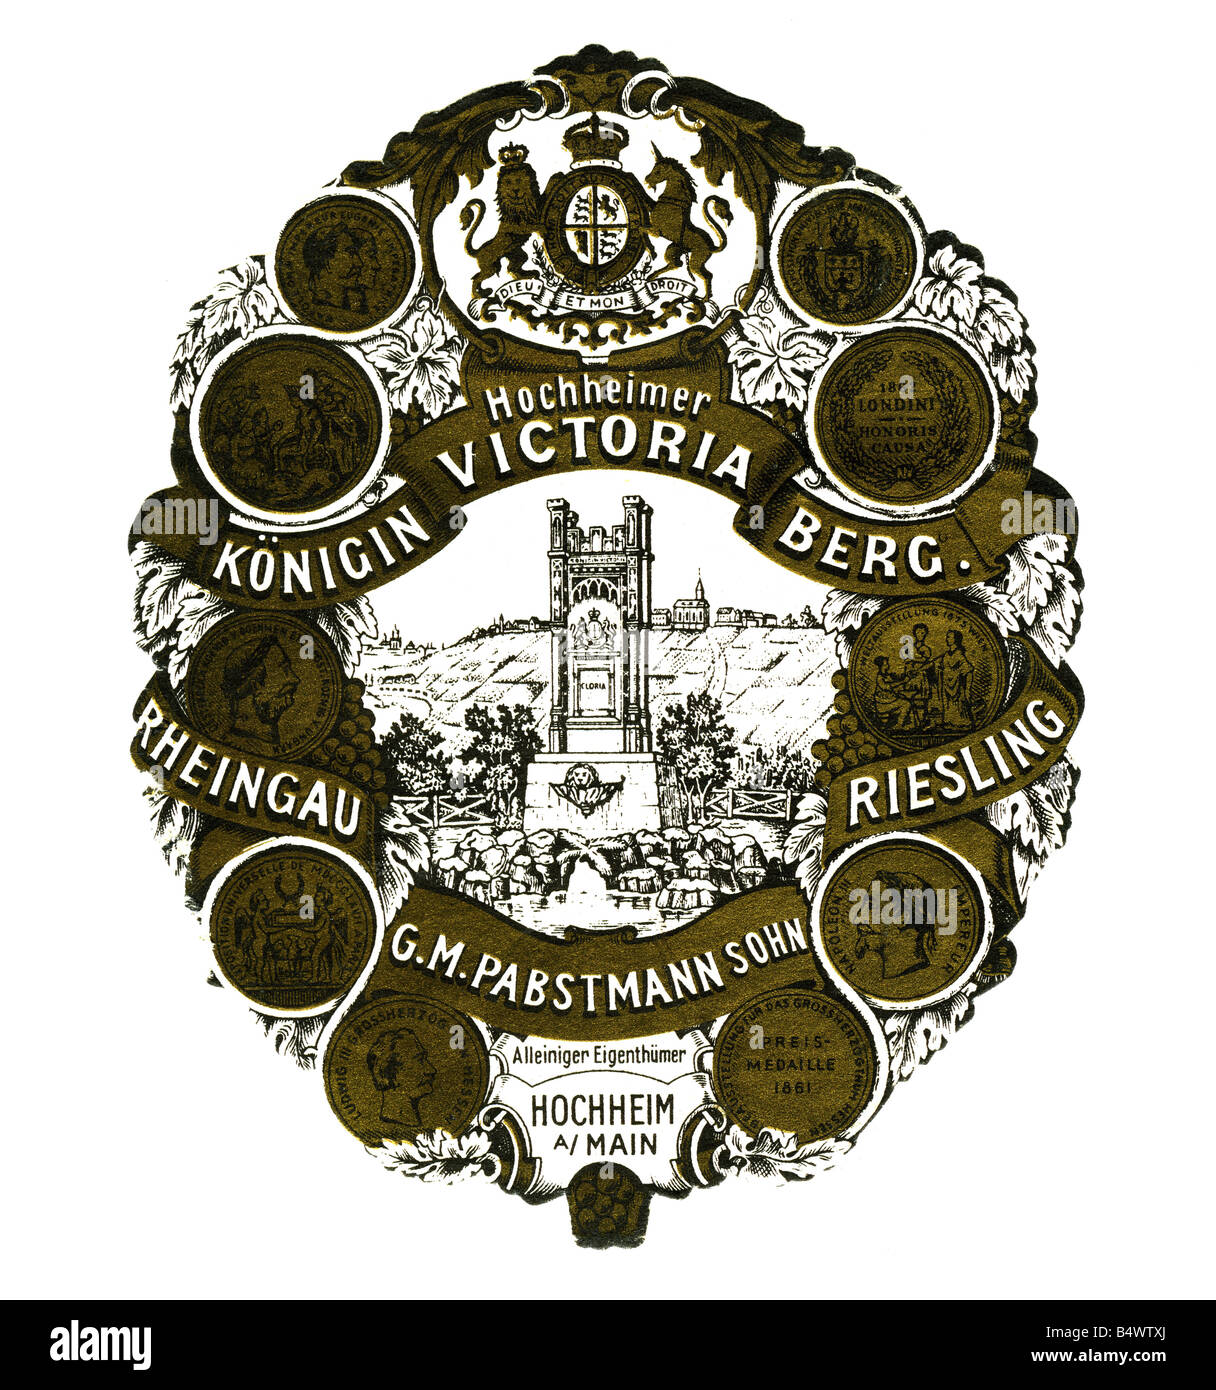 alcohol, wine, labels, 'Hochheimer Koenigin Victoria Berg', Winery Georg Michael Papstmann, Hochheim am Main, circa 1880, , Stock Photo